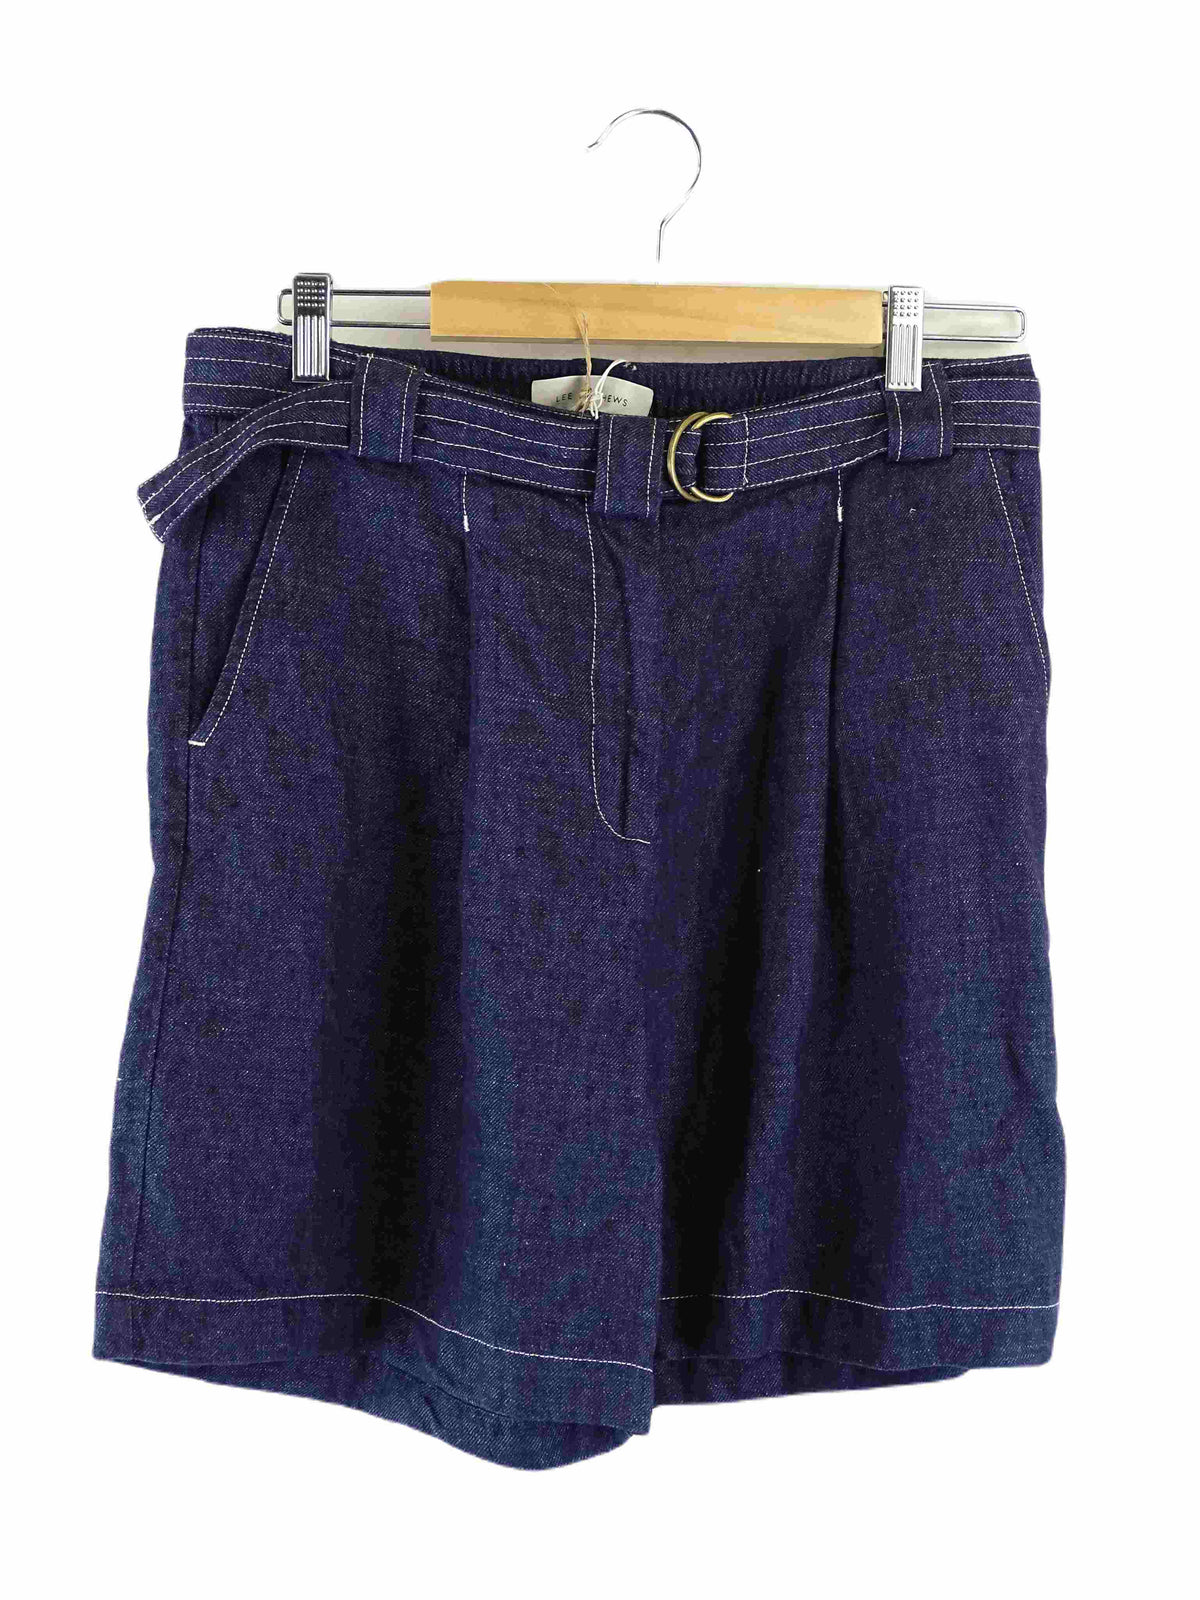 Lee Mathews Blue Denim Shorts 10